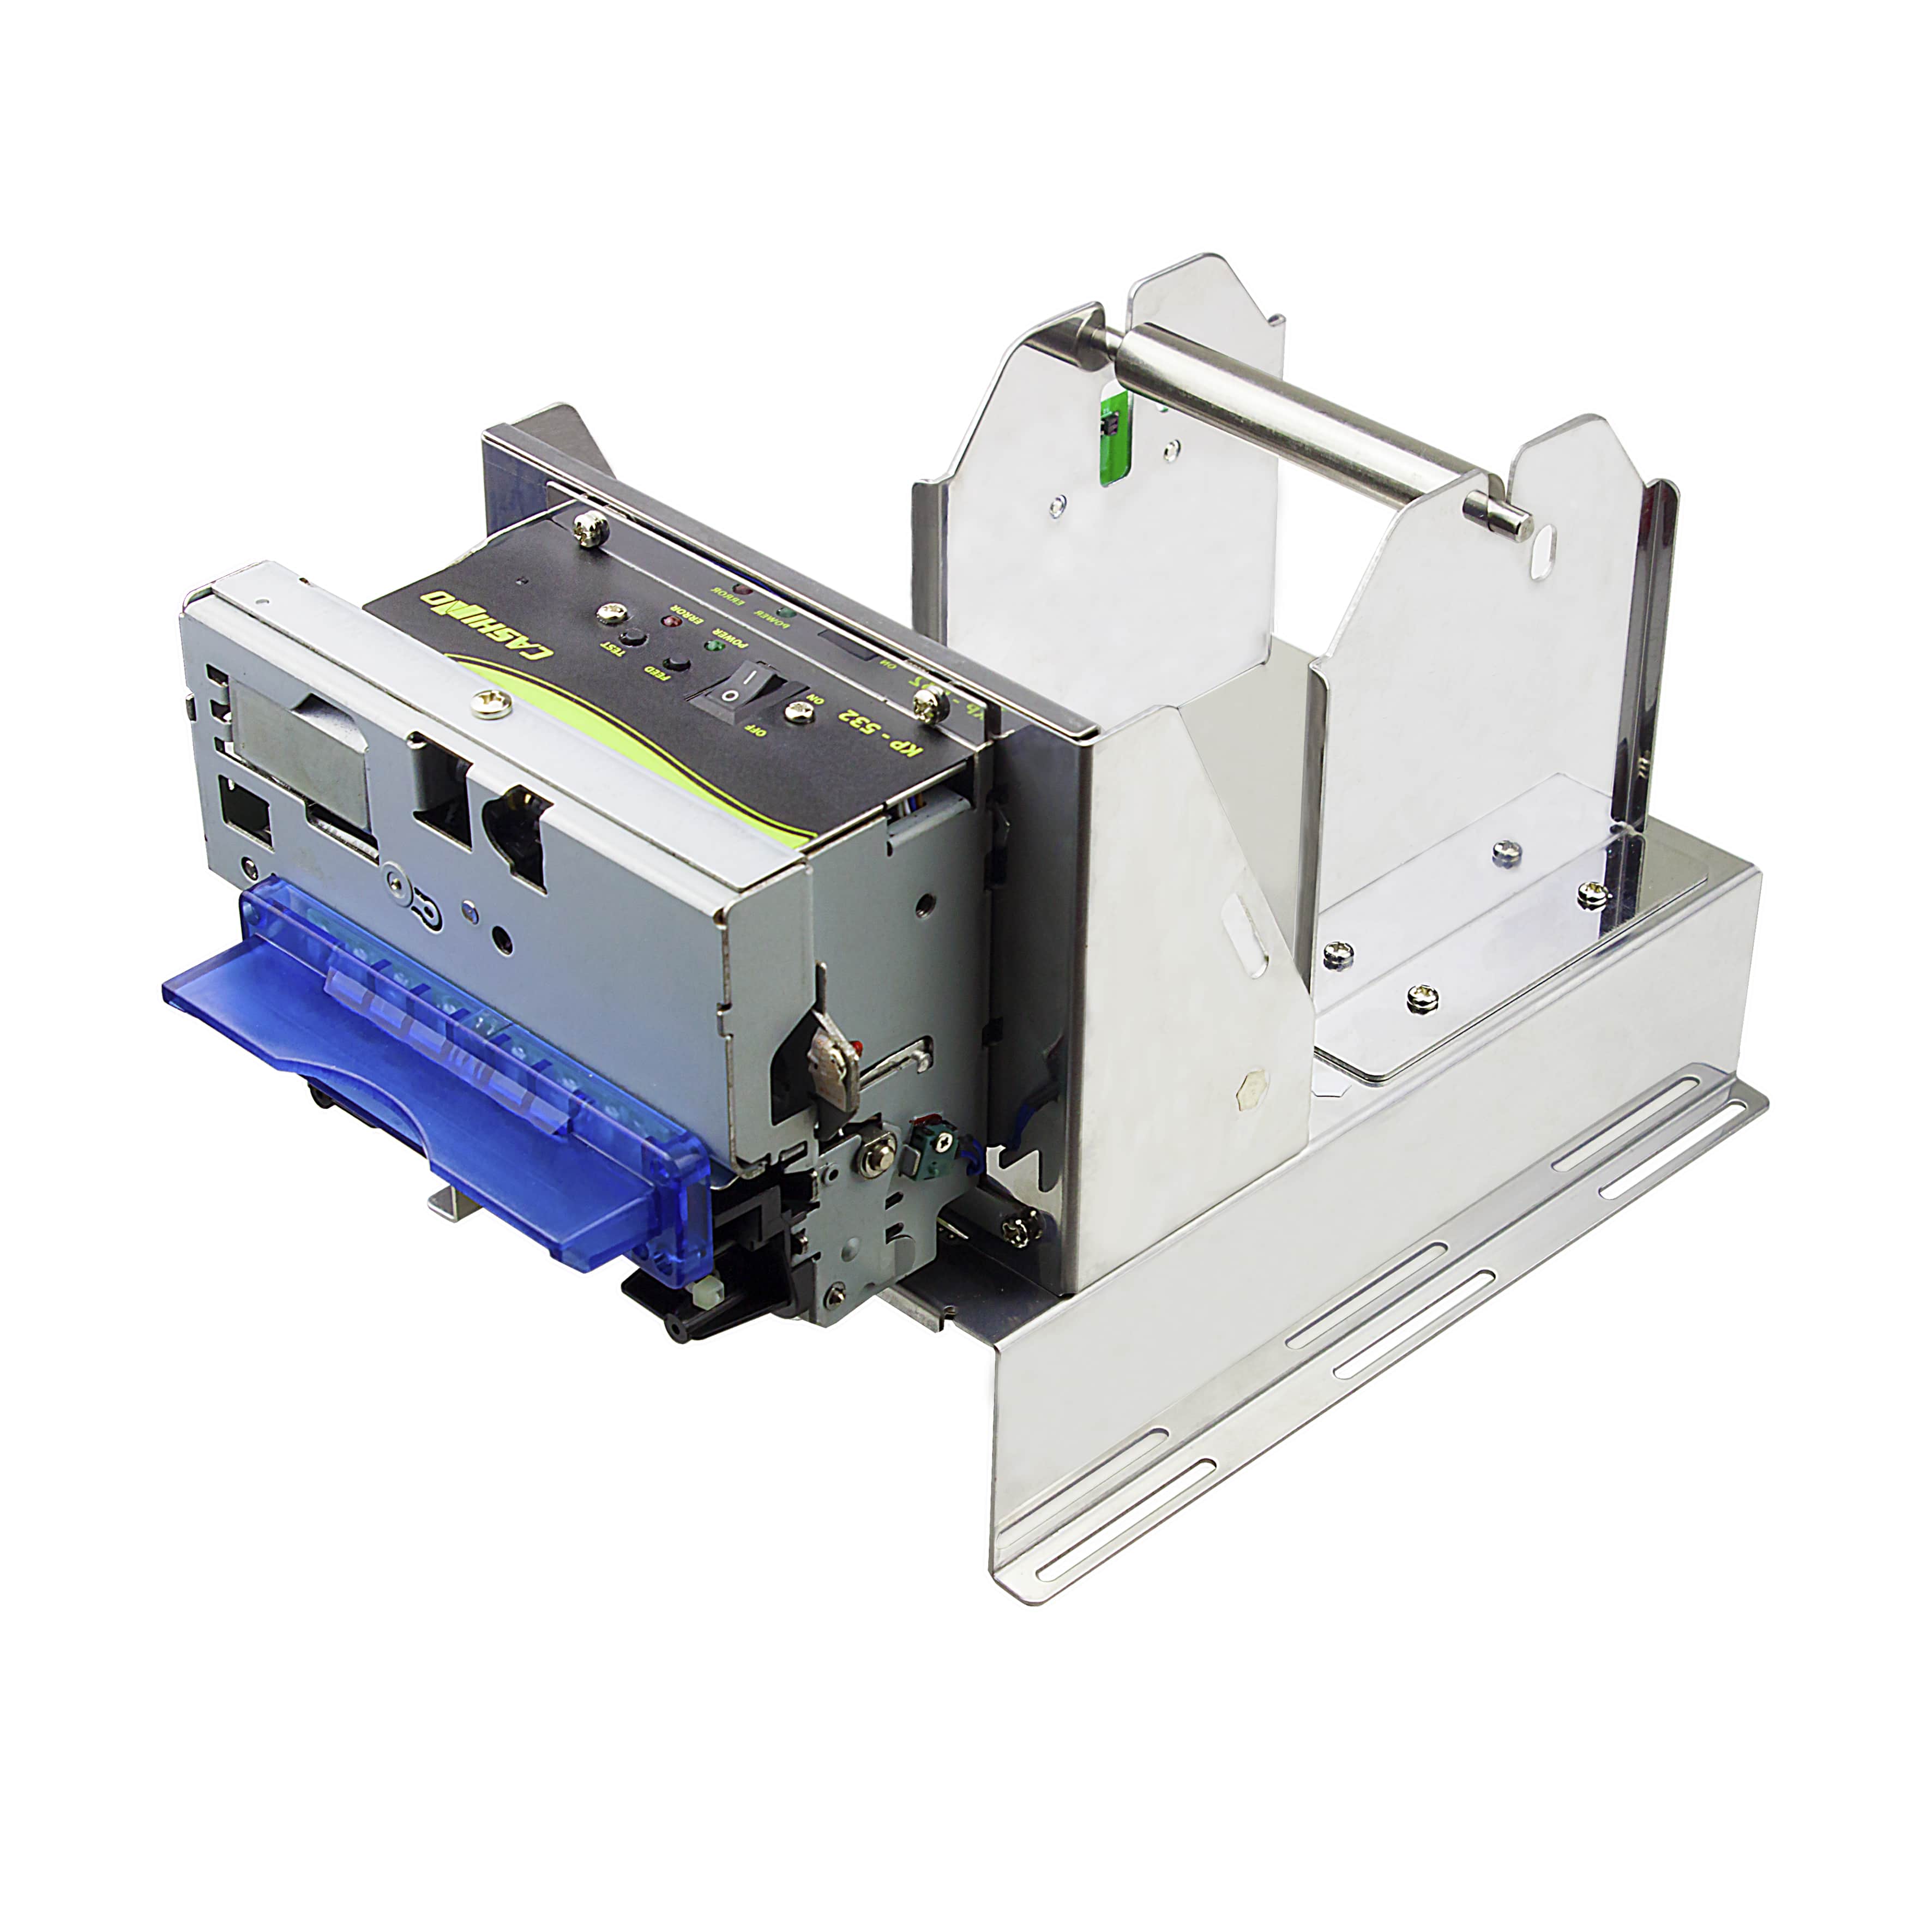 Impresora térmica de quiosco de alta velocidad KP-532 de 80 mm de ancho
